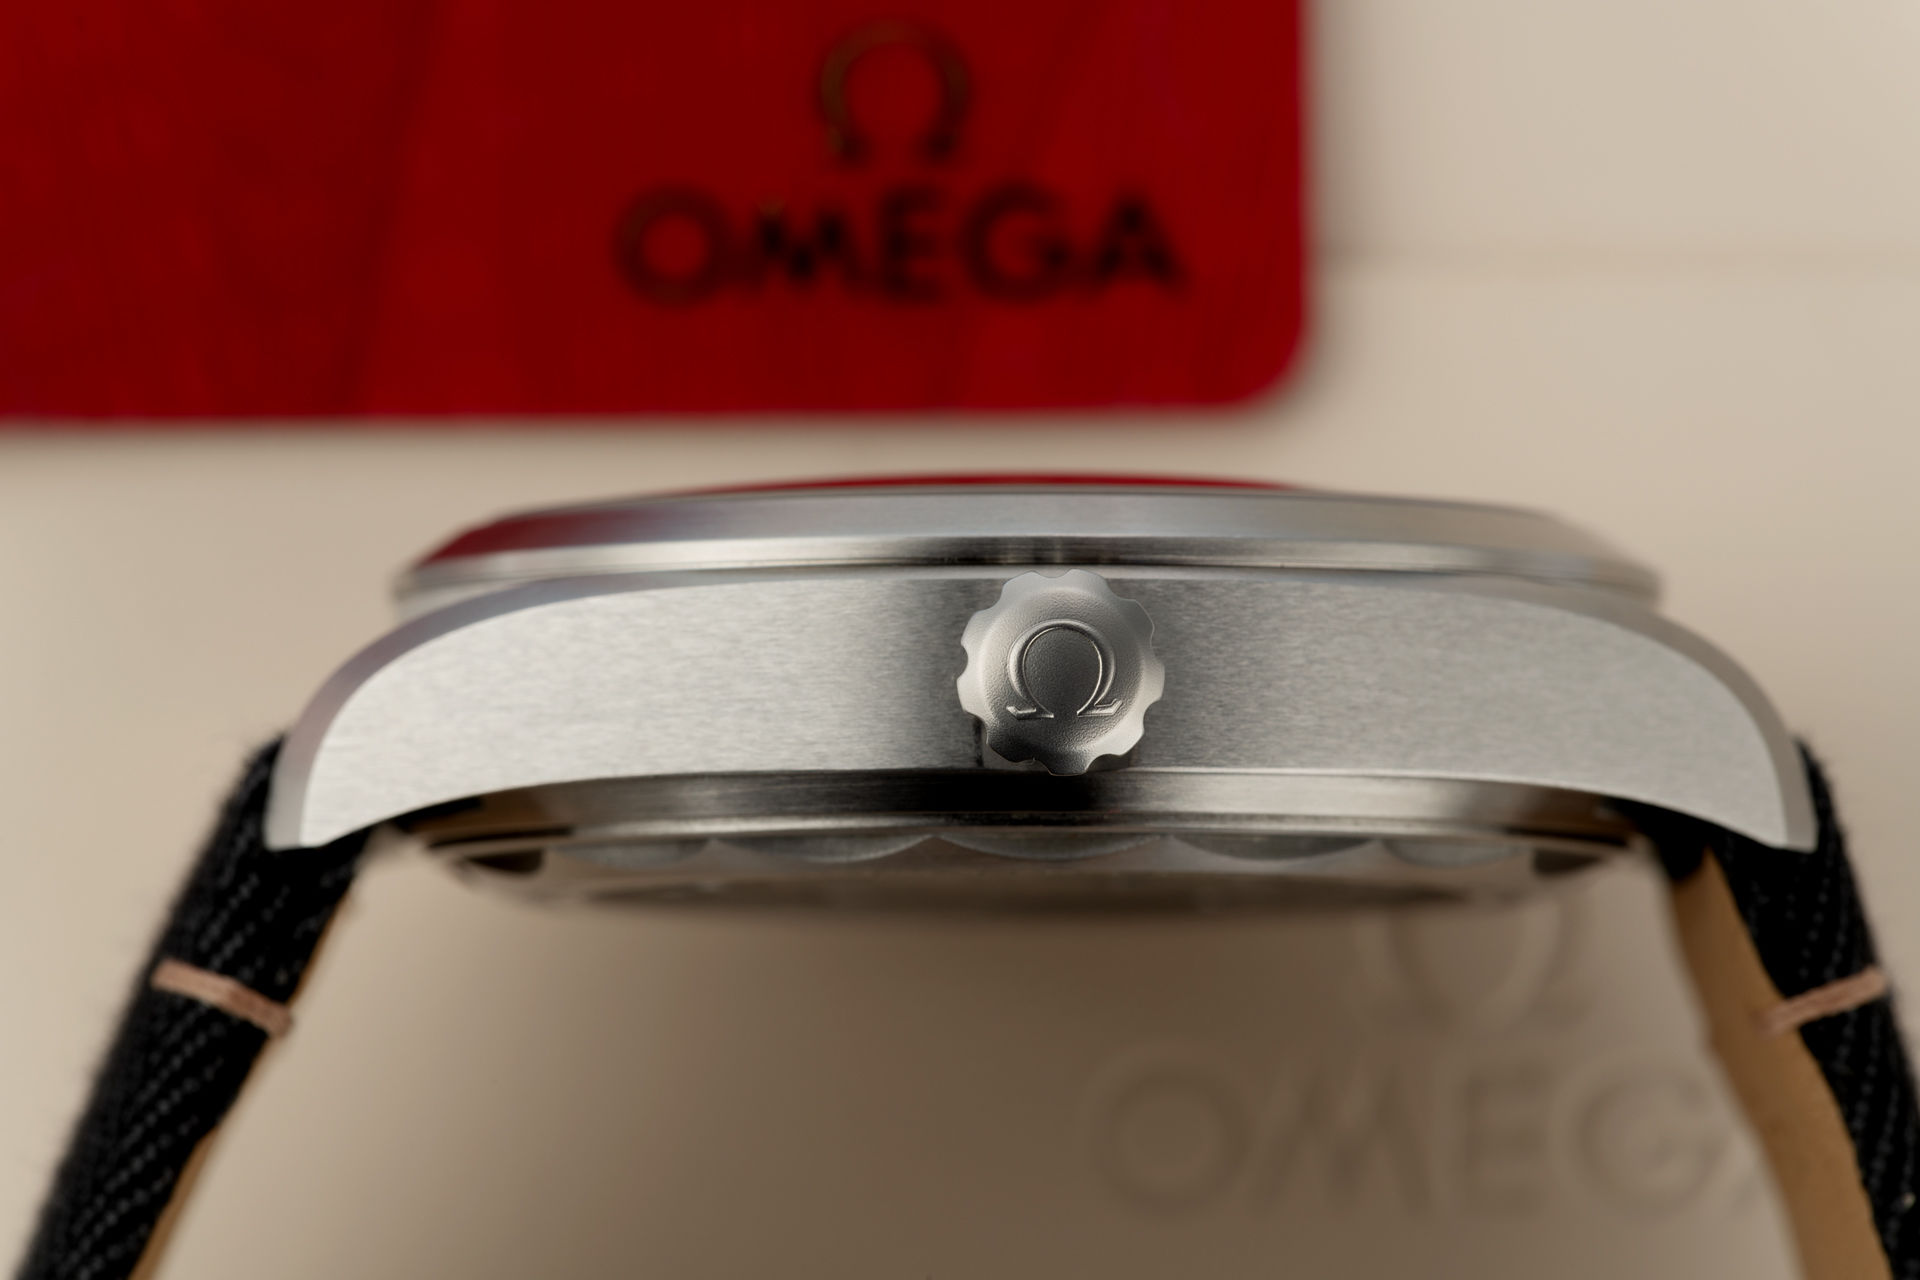 ref 22012402001001 | New Model 'Omega Warranty' | Omega Railmaster